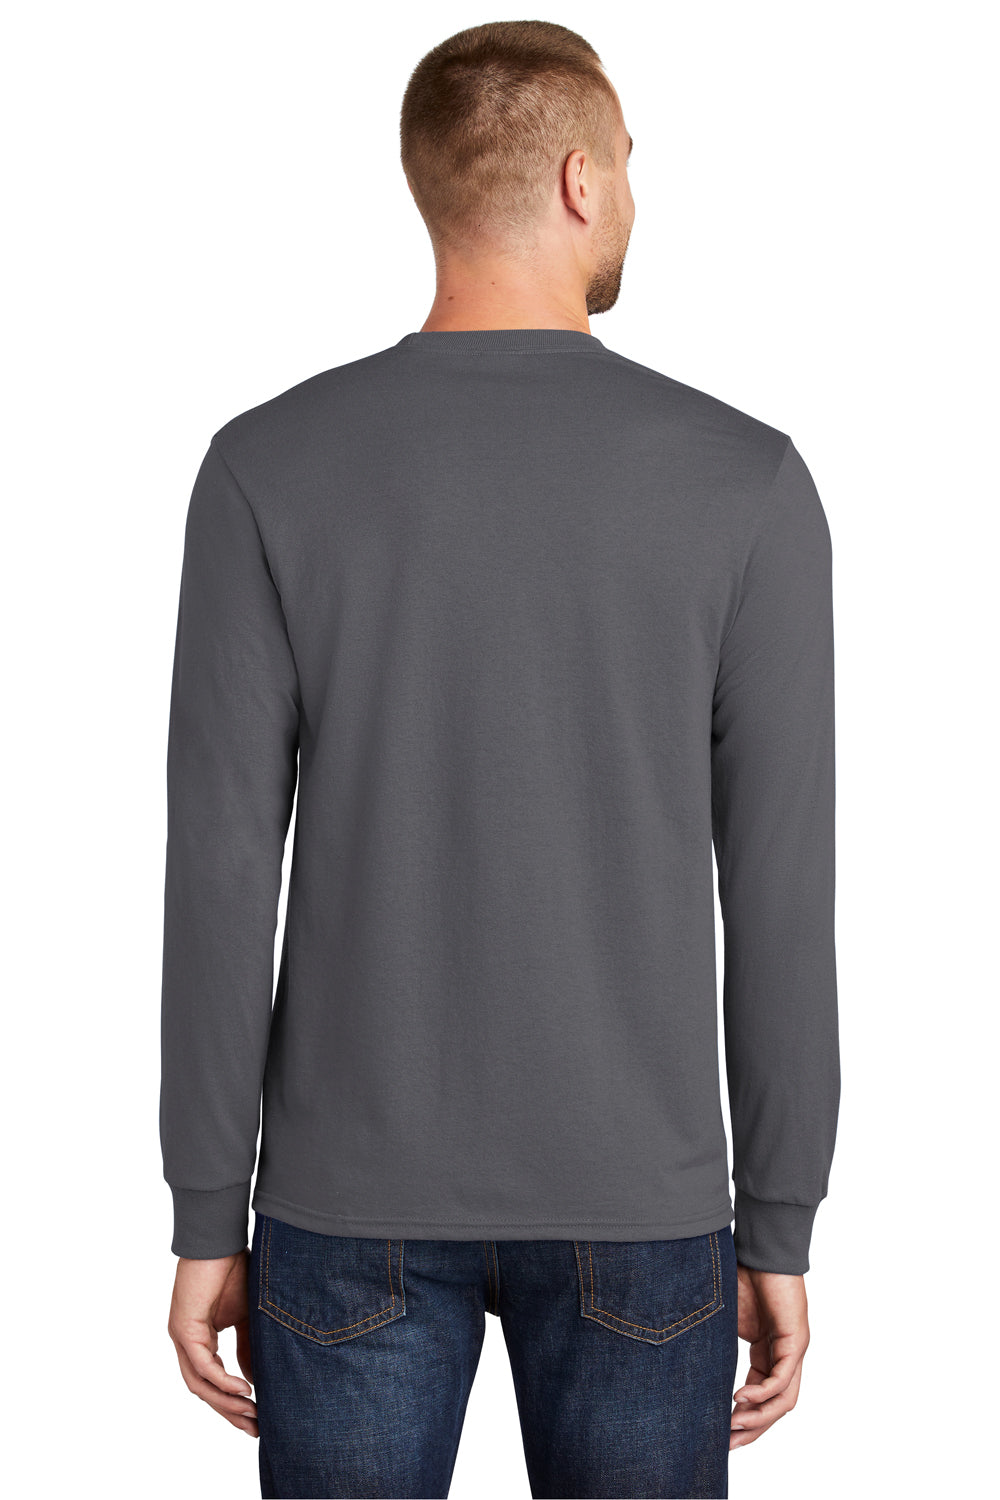 Port & Company PC55LS Mens Core Long Sleeve Crewneck T-Shirt Charcoal Grey Back